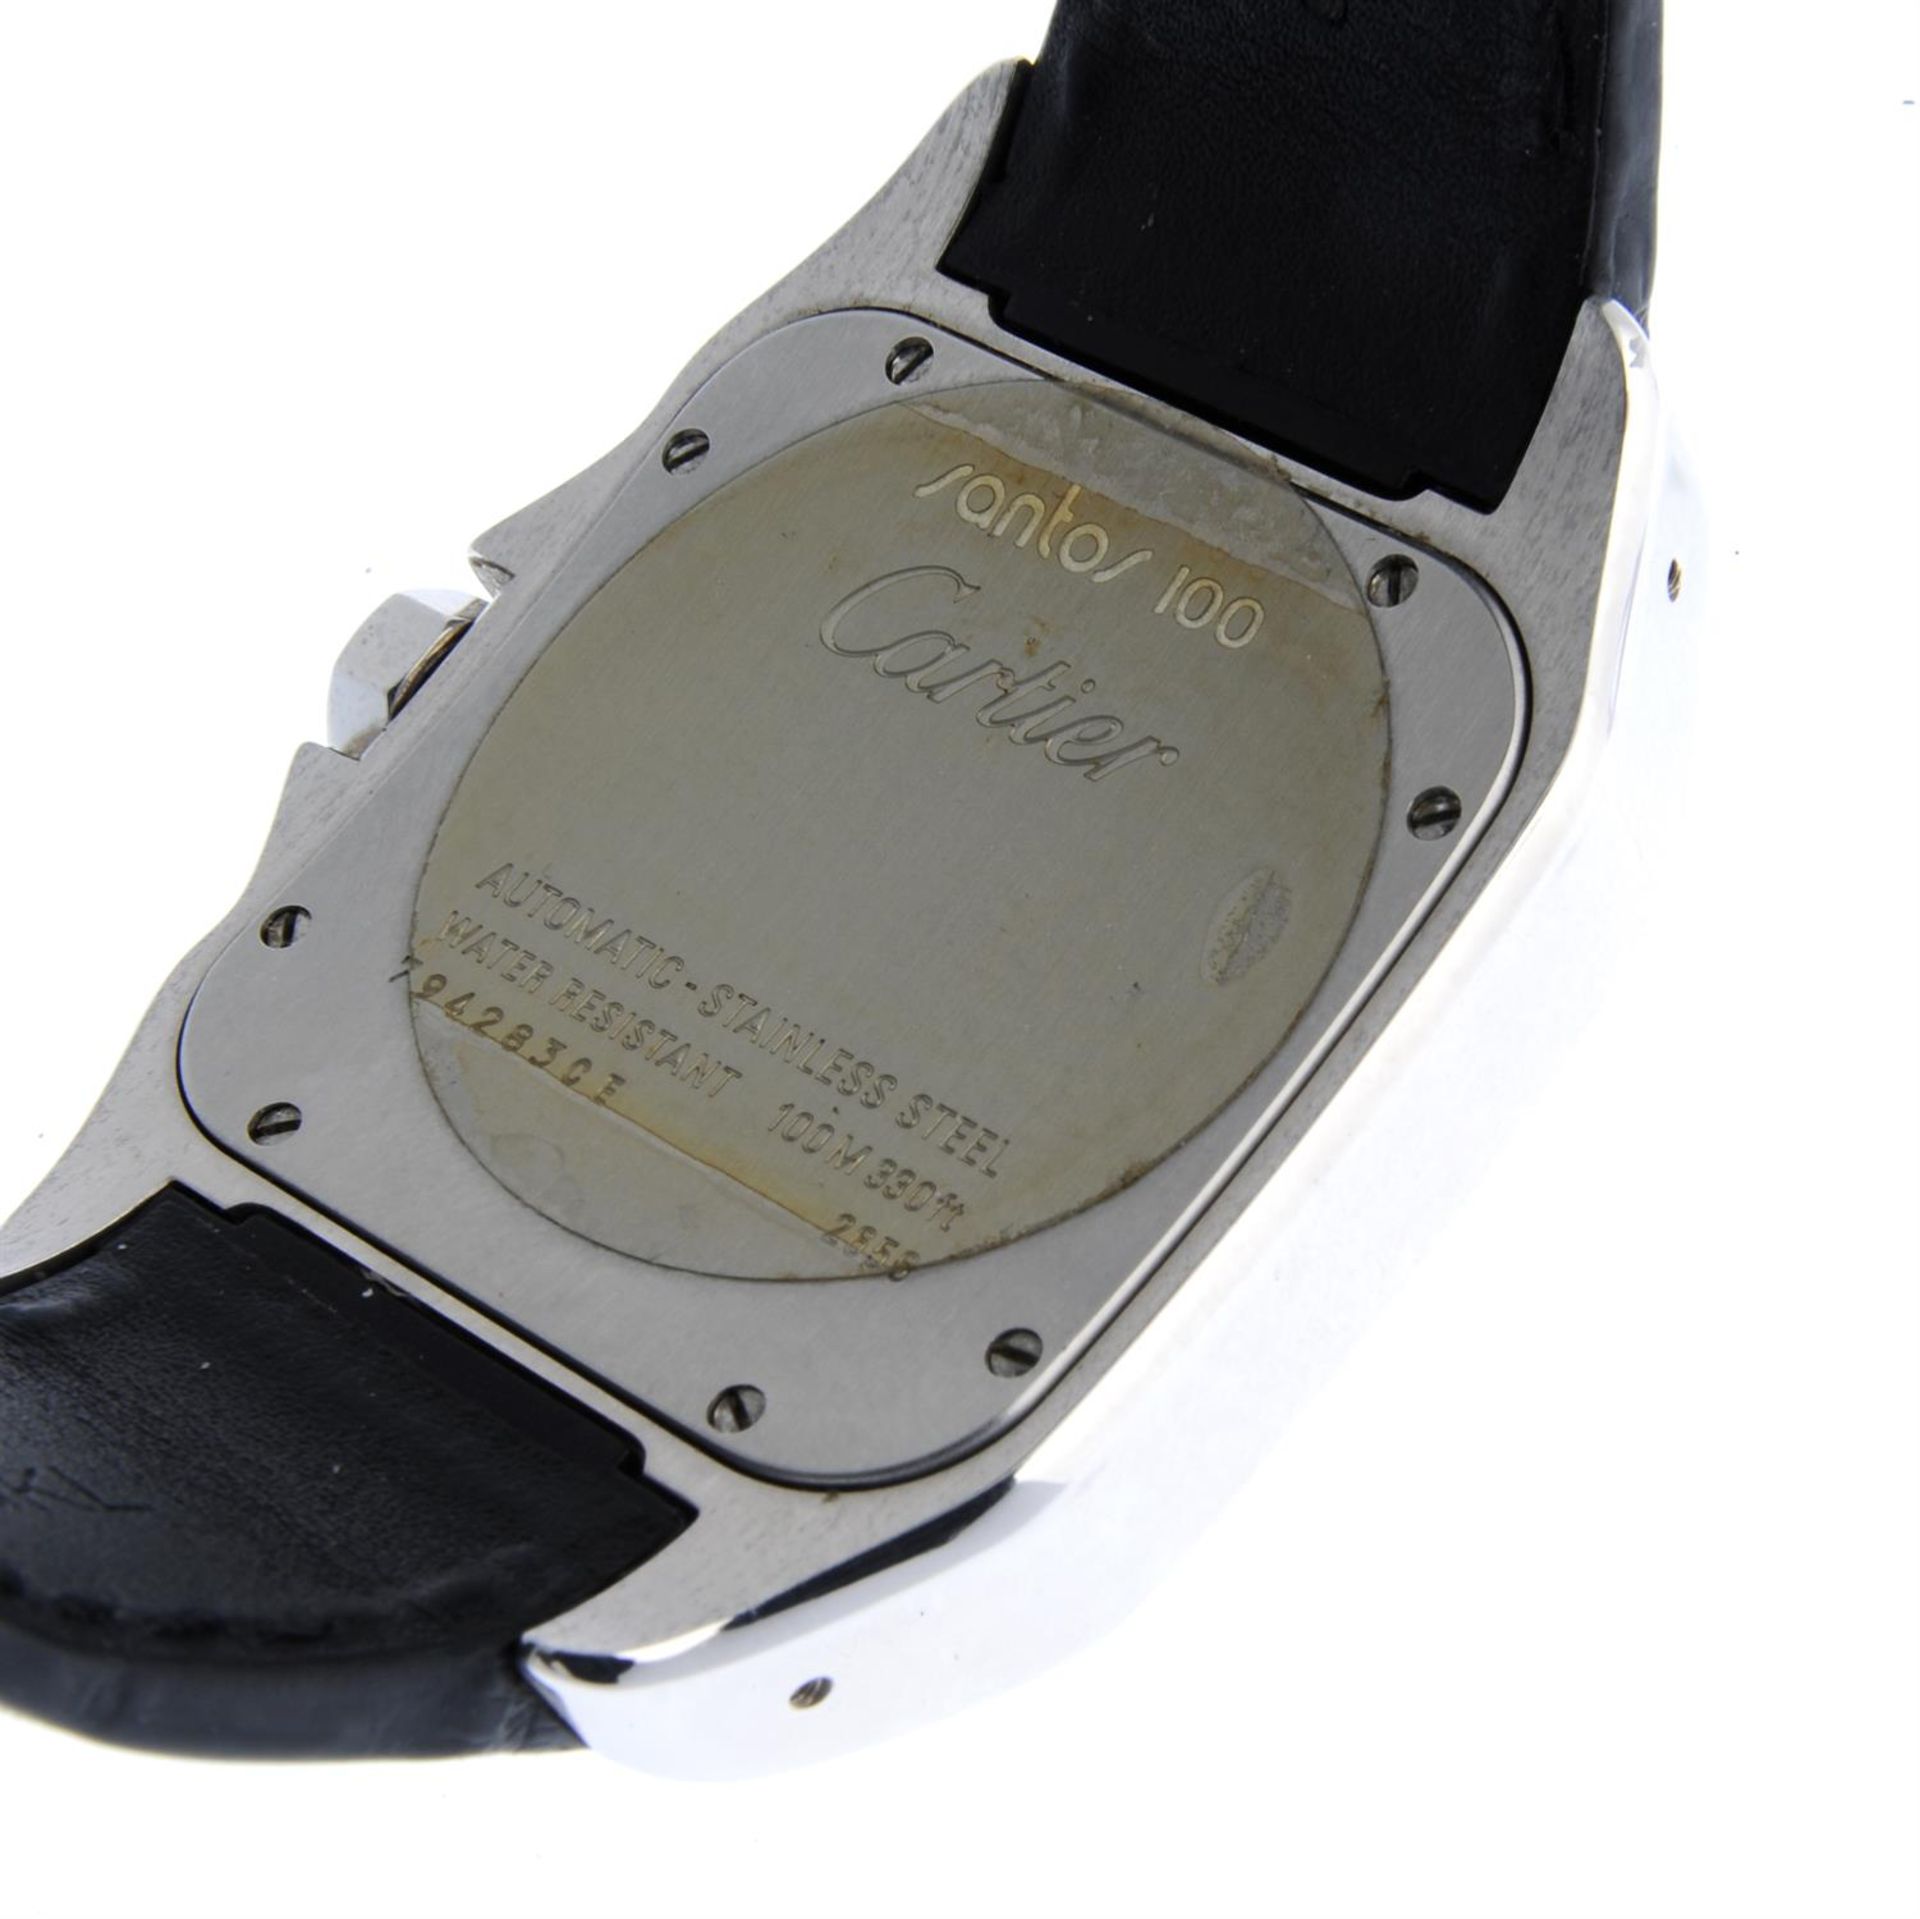 CARTIER - a diamond set stainless steel Santos 100 wrist watch, 38mm x 38mm. - Image 4 of 6